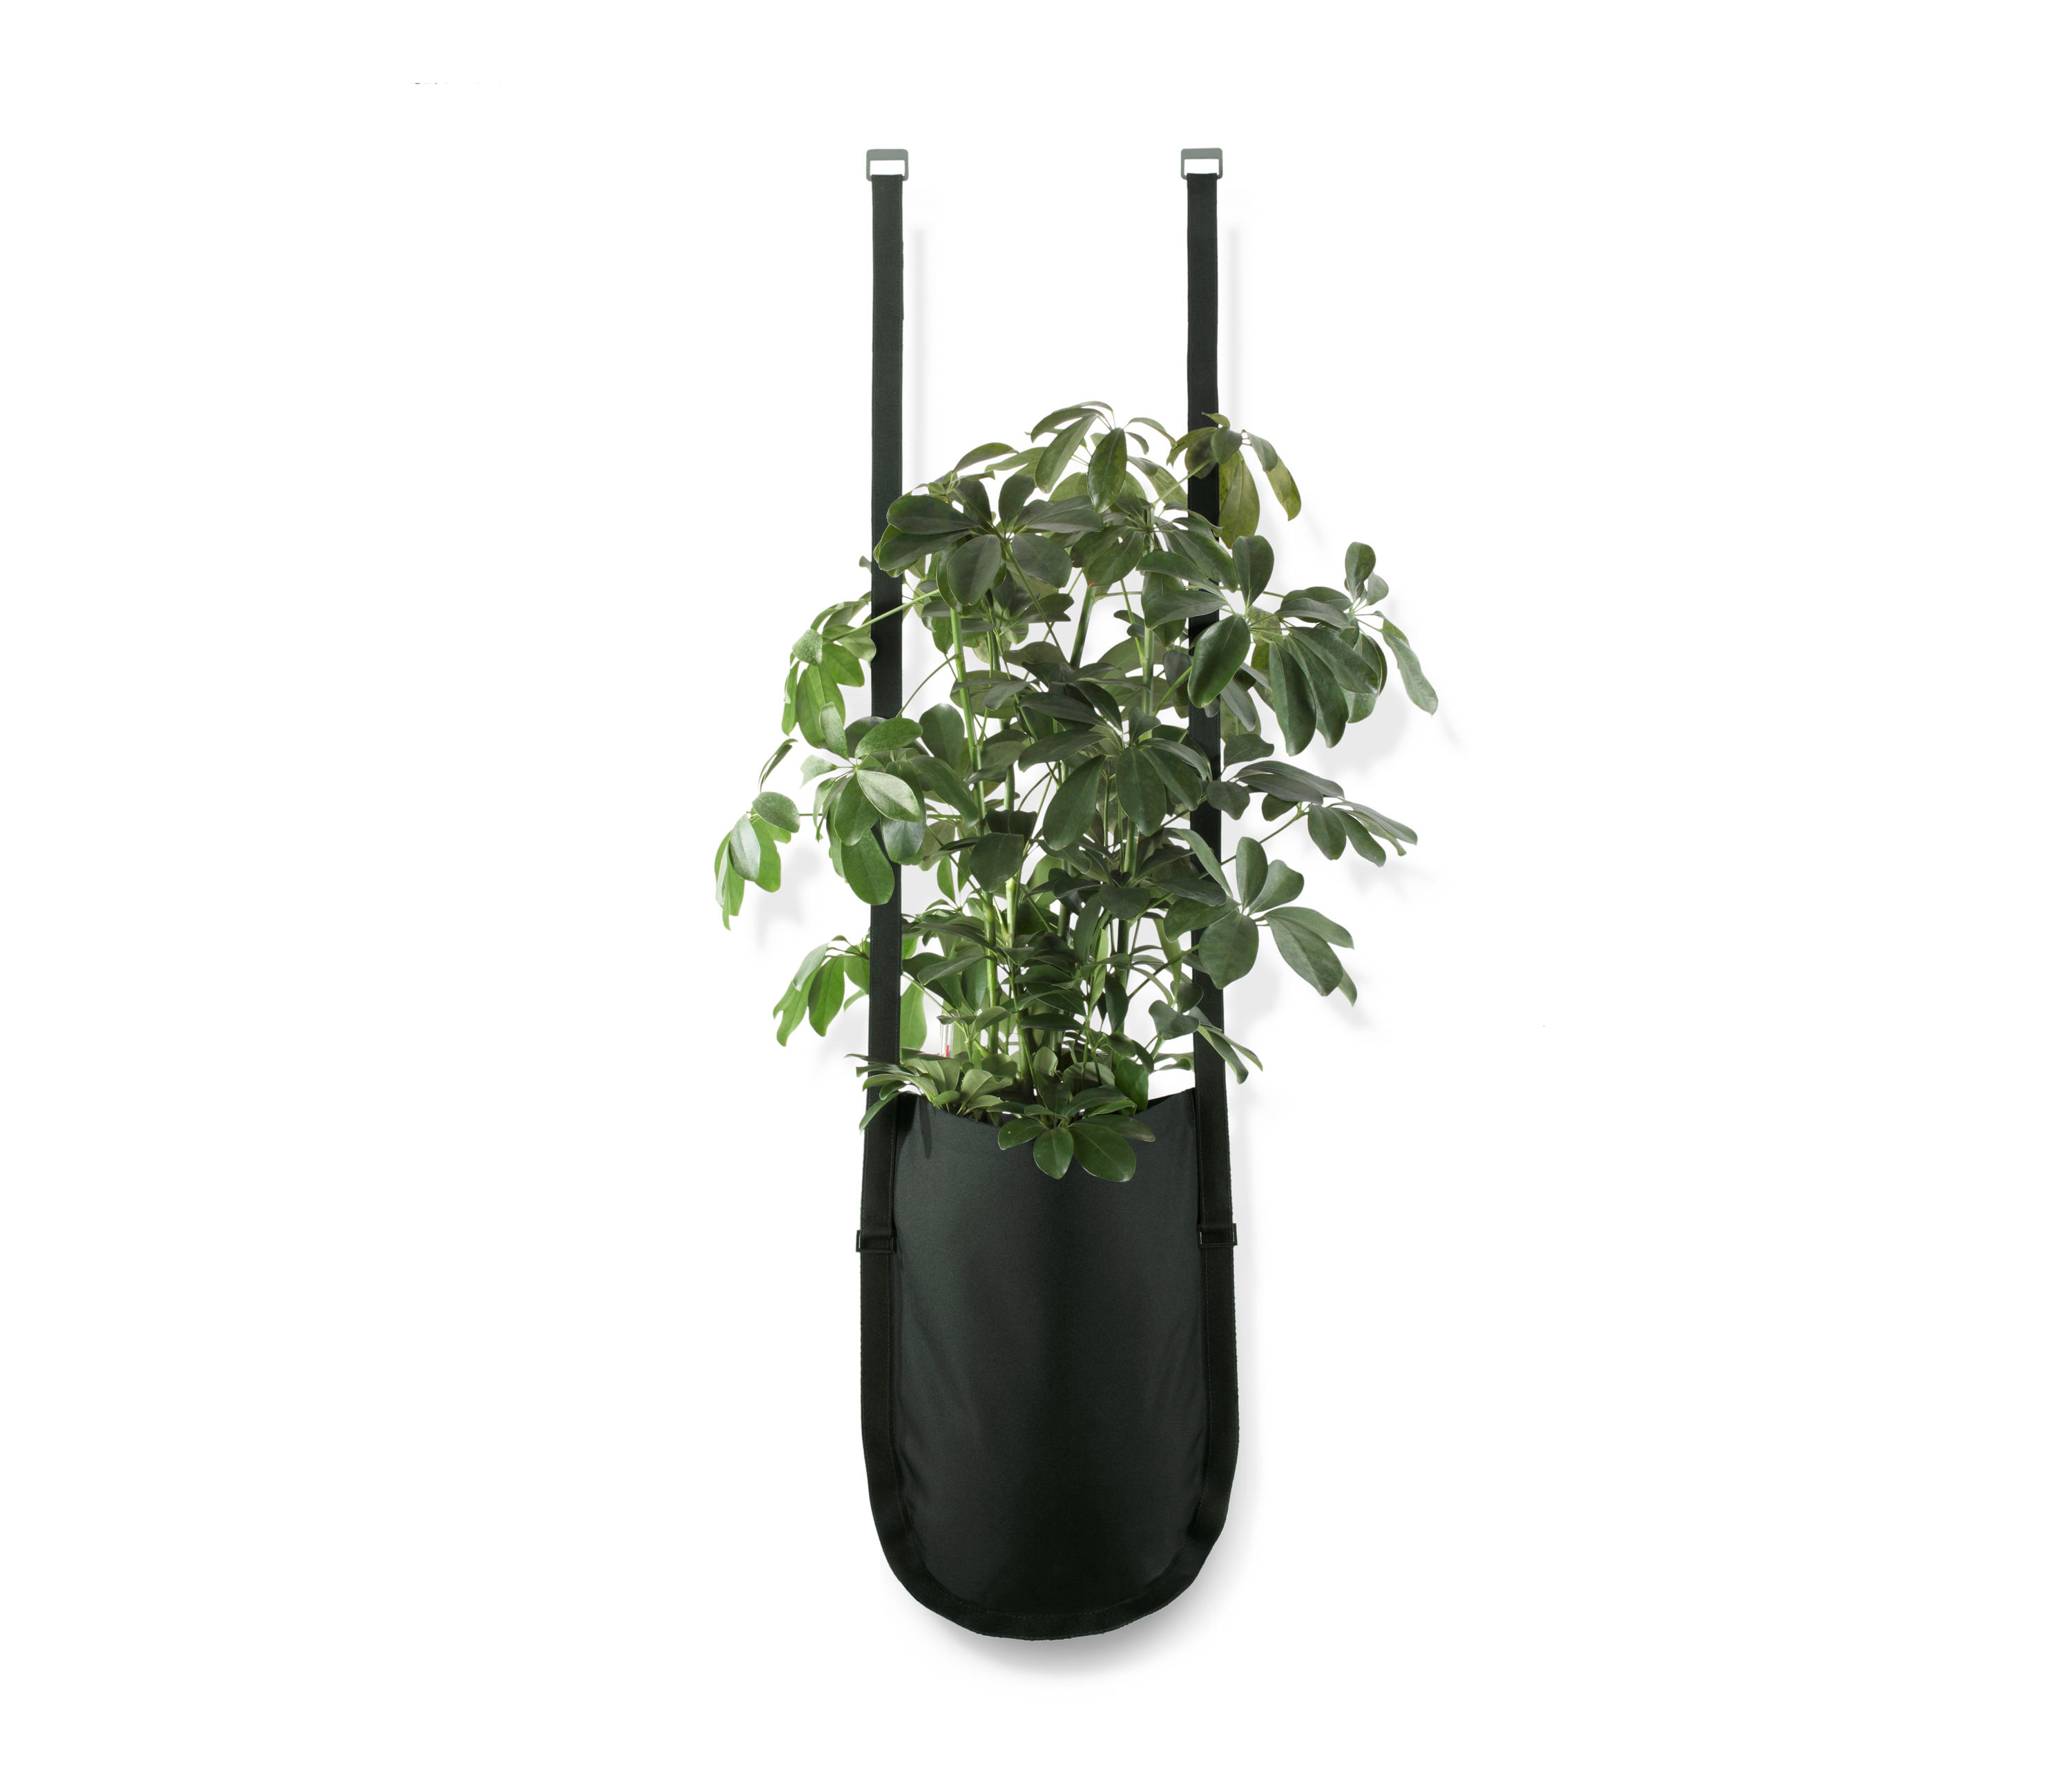 https://image.architonic.com/img_pro2-4/115/2352/urban-garden-p-71217-26-plant-bag-l-with-plant-2-01-b.jpg